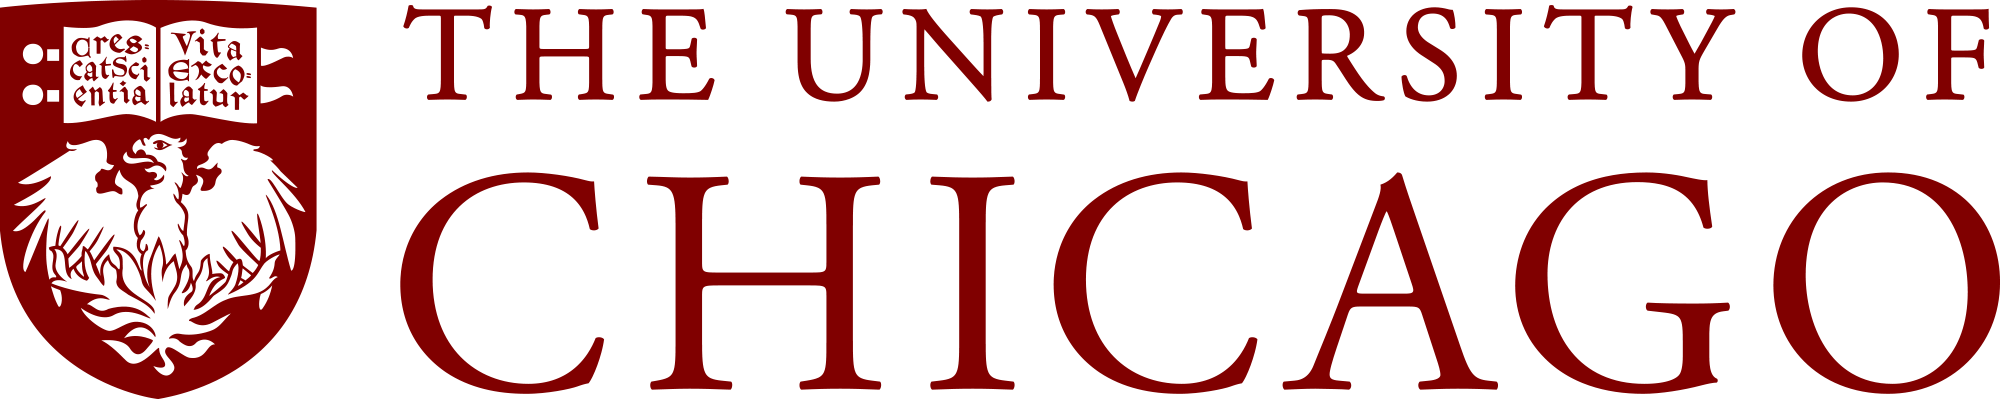 Civic Engagement University of Chicago